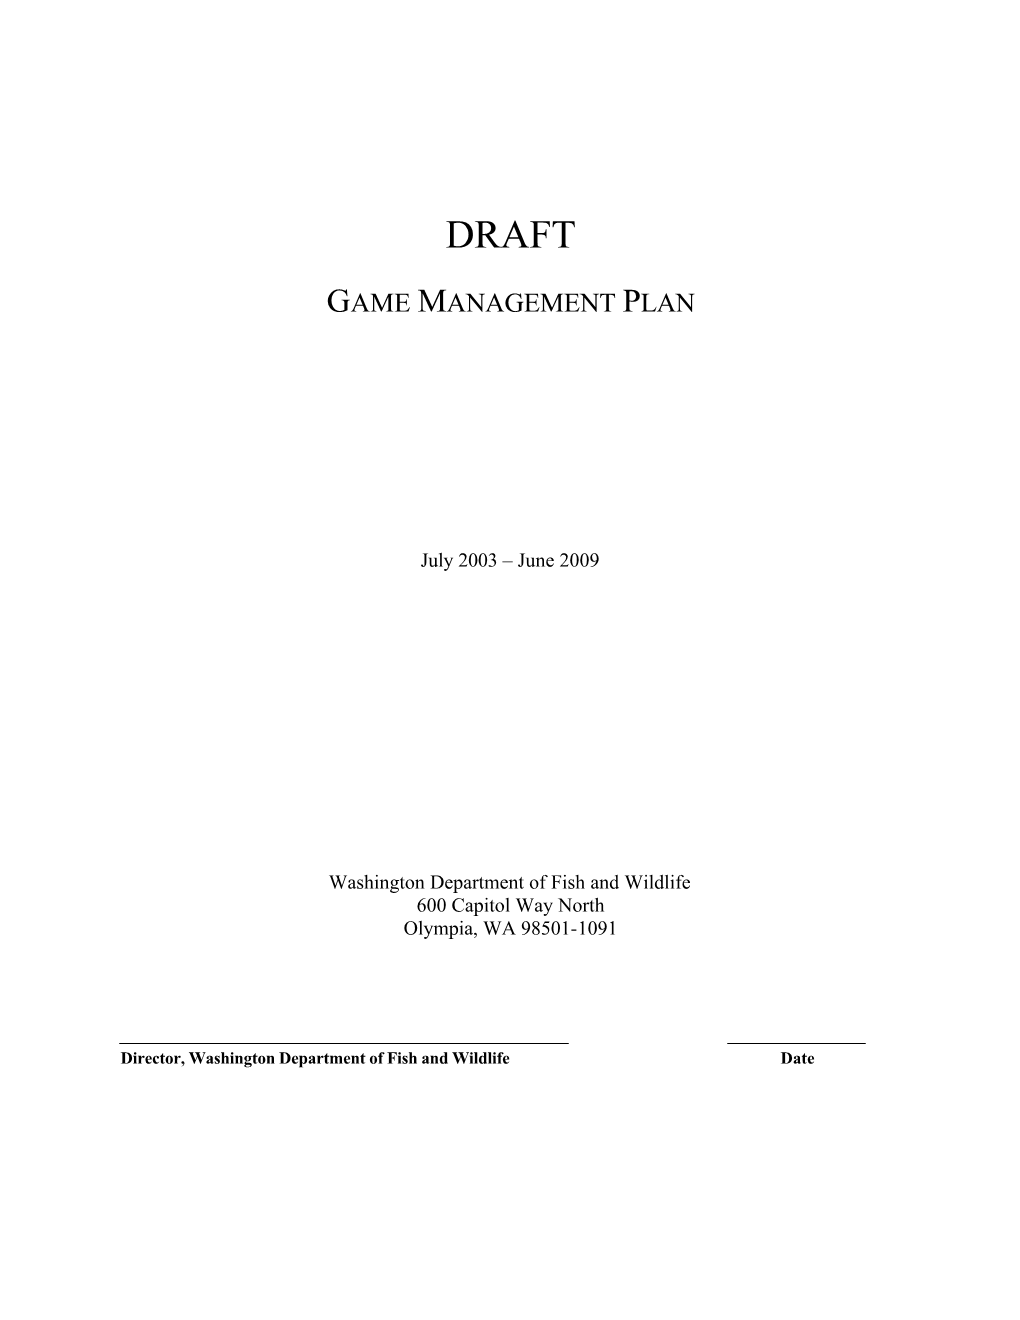 WDFW Game Management Plan